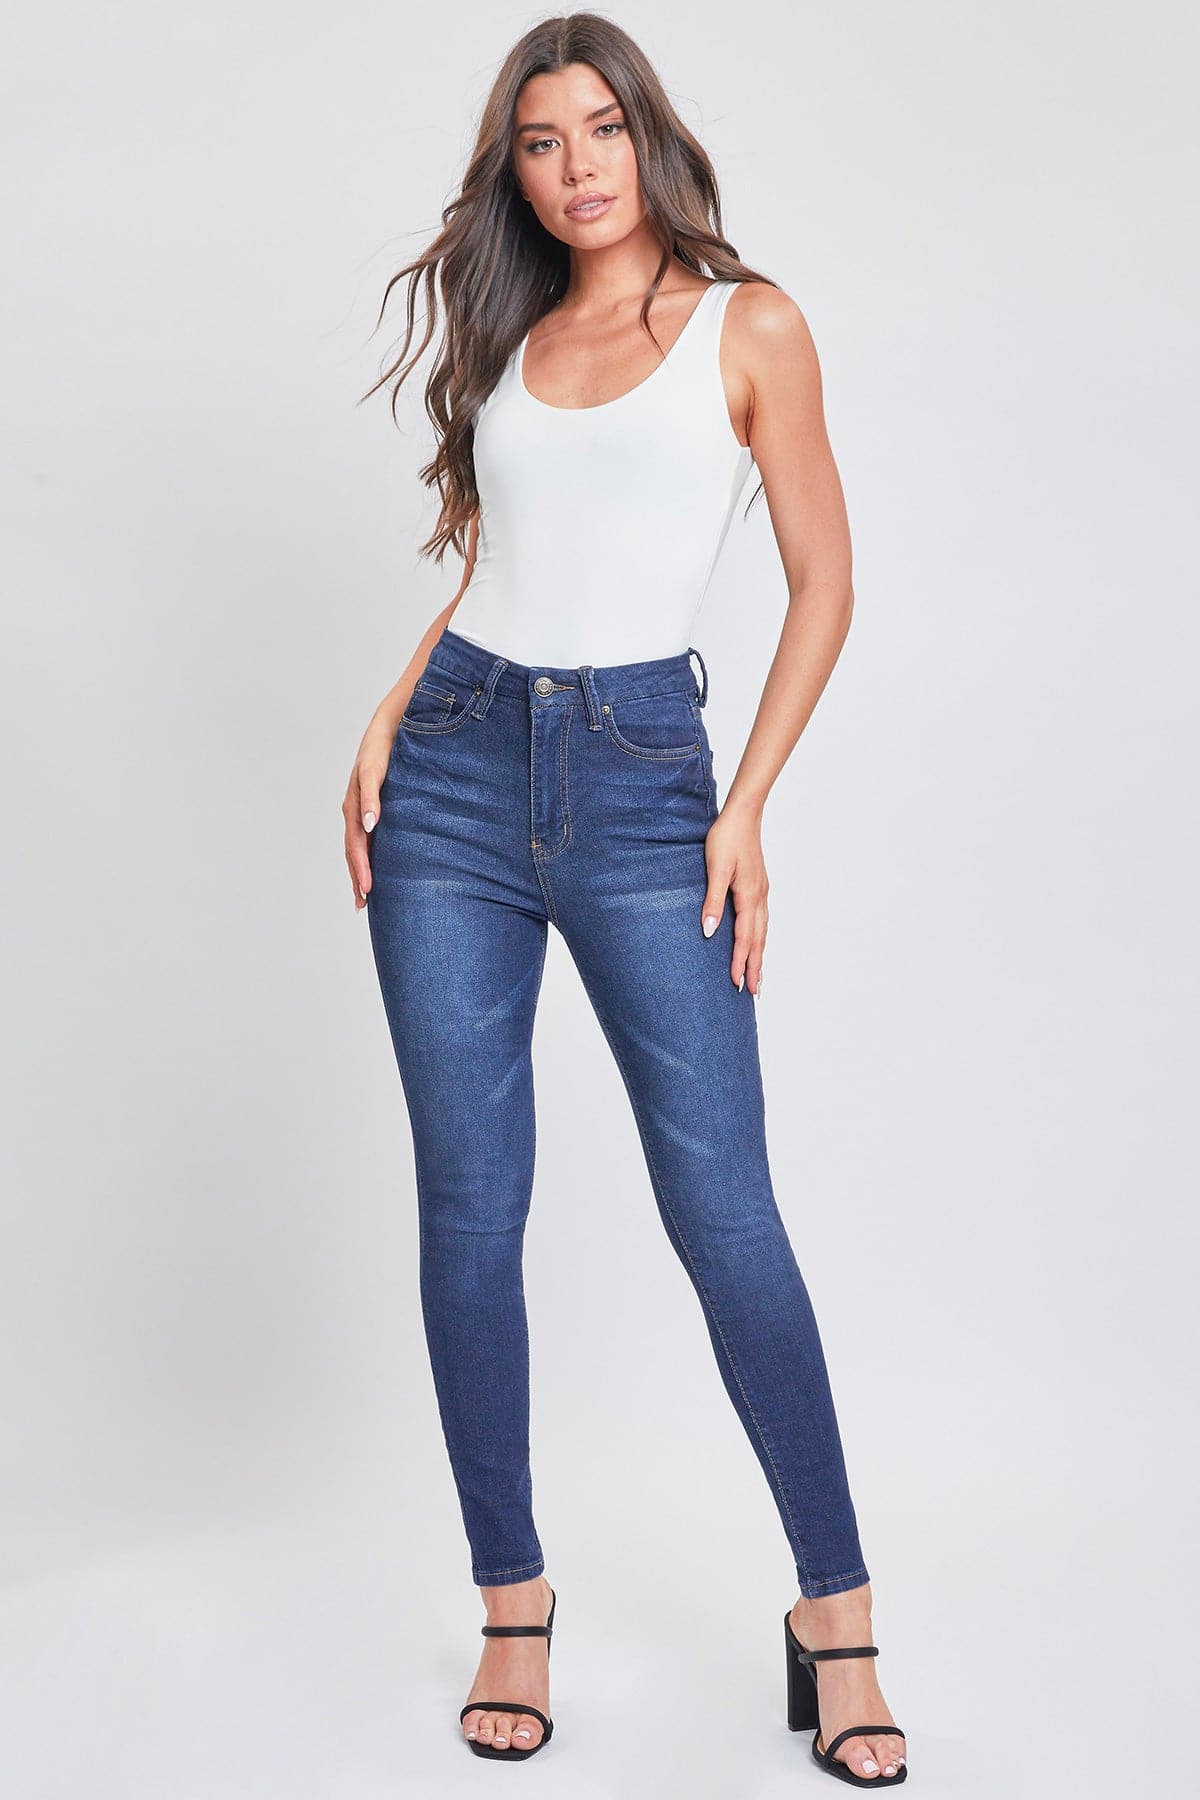 Women's Curvy Fit Jeans